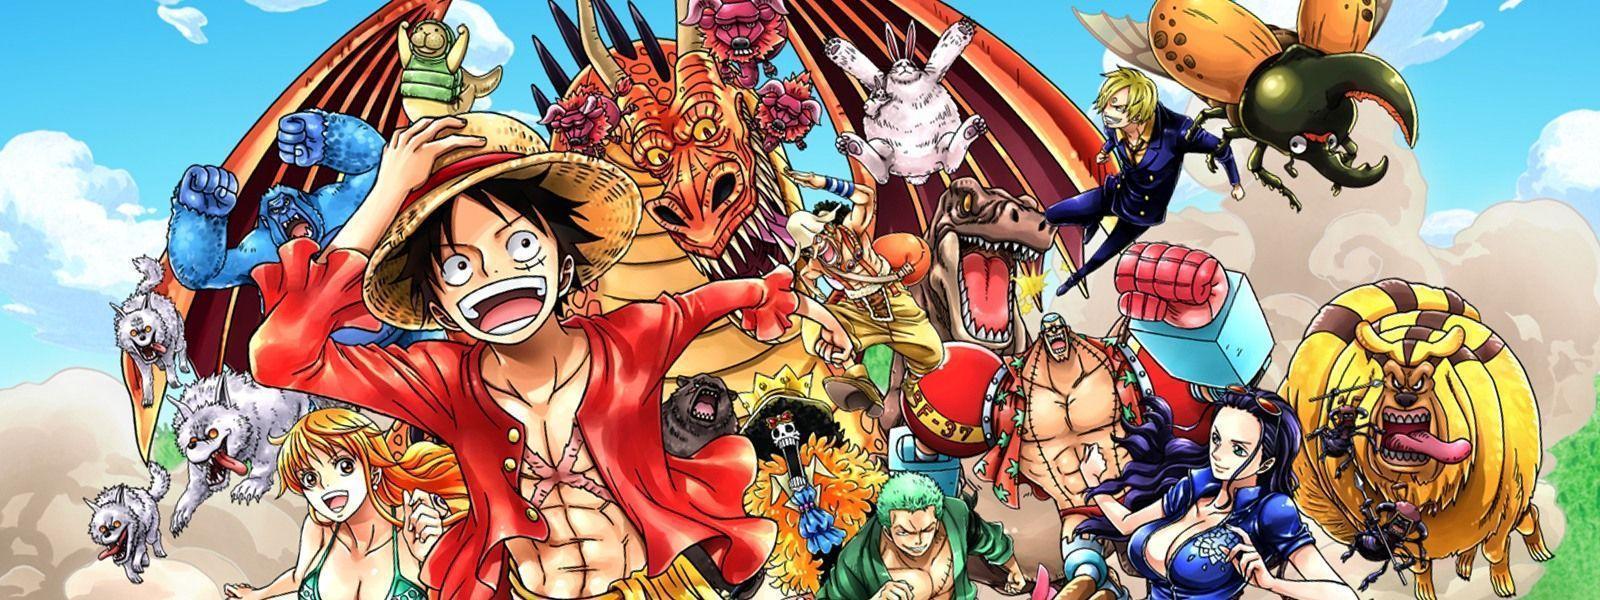 Quality One Piece Wallpaper, Anime & Manga